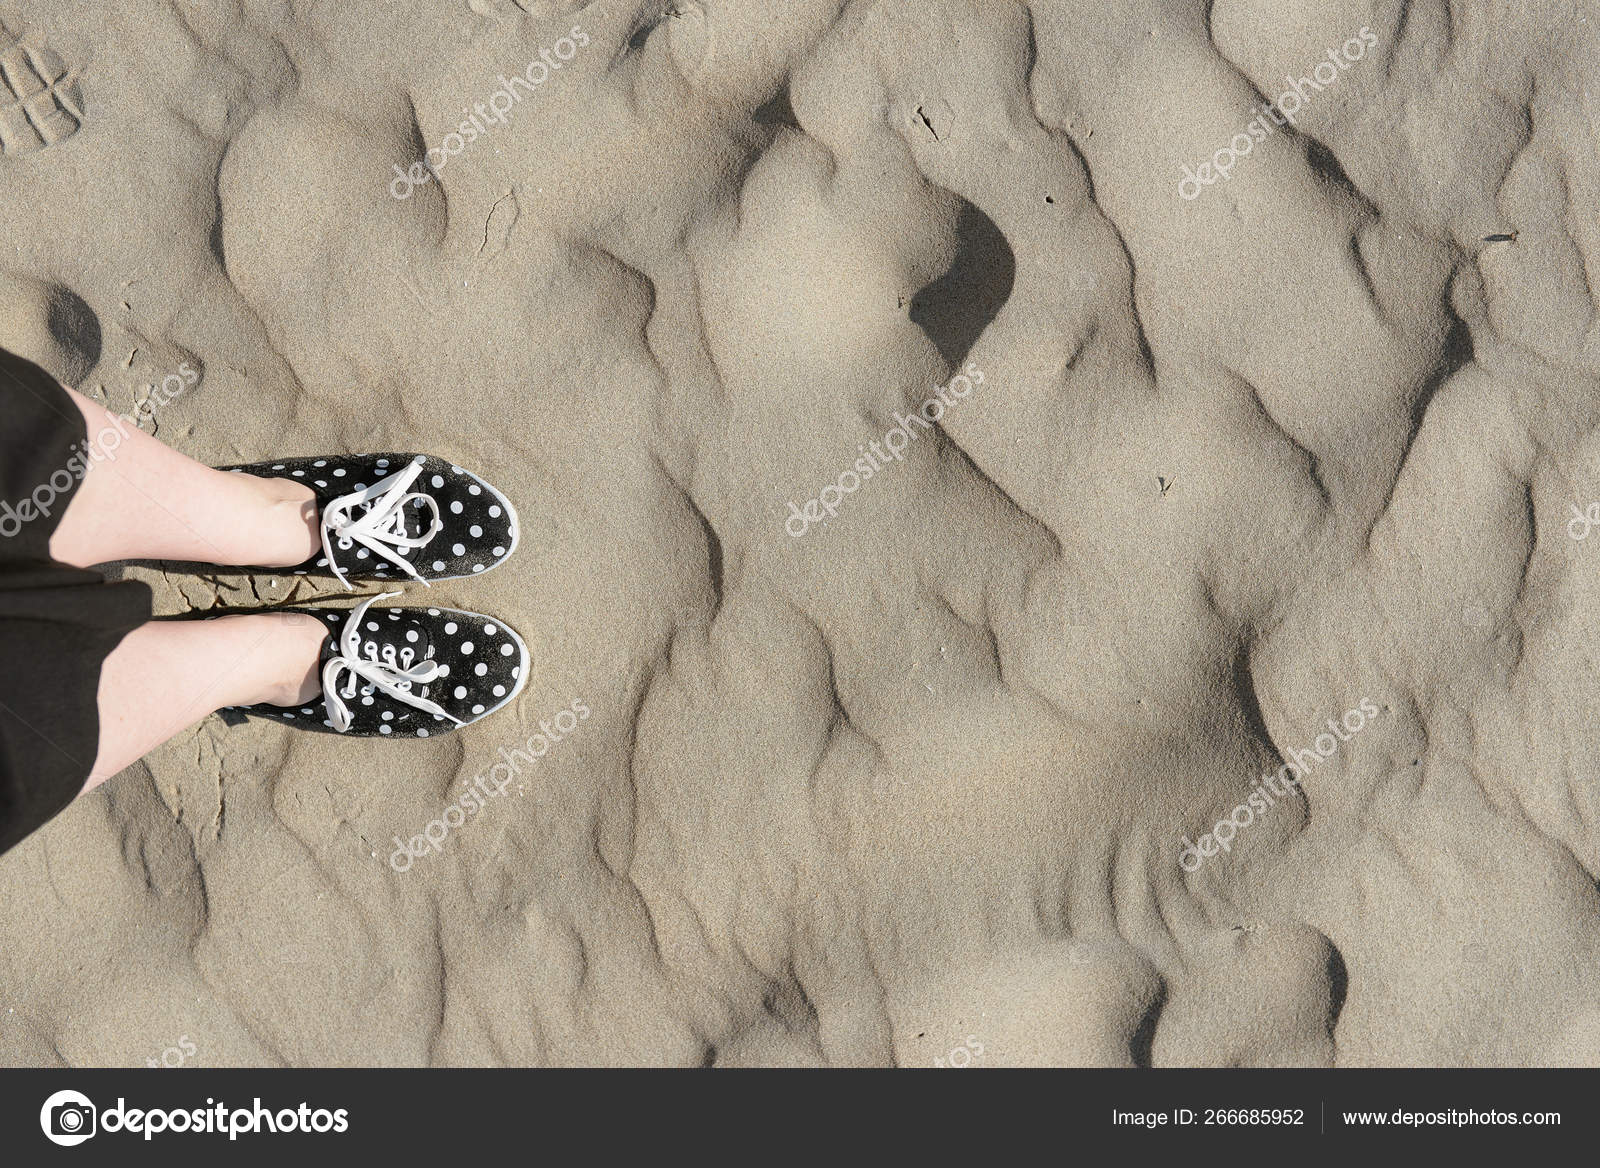 Butt prints in the sand ian cameron mclaren